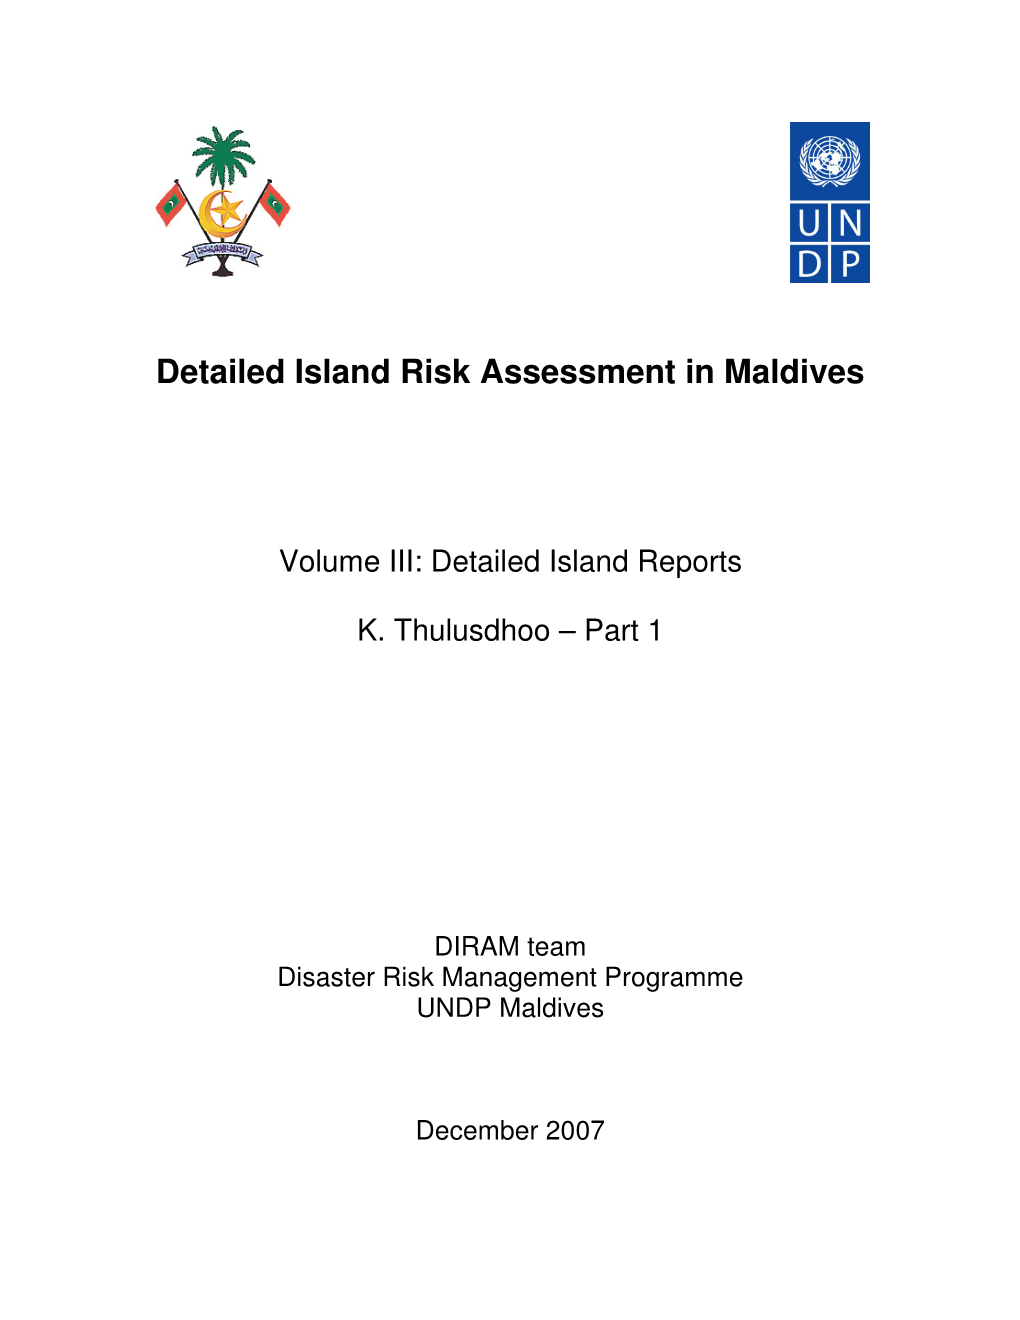 Detailed Island Risk Assessment in Maldives, K. Thulusdhoo